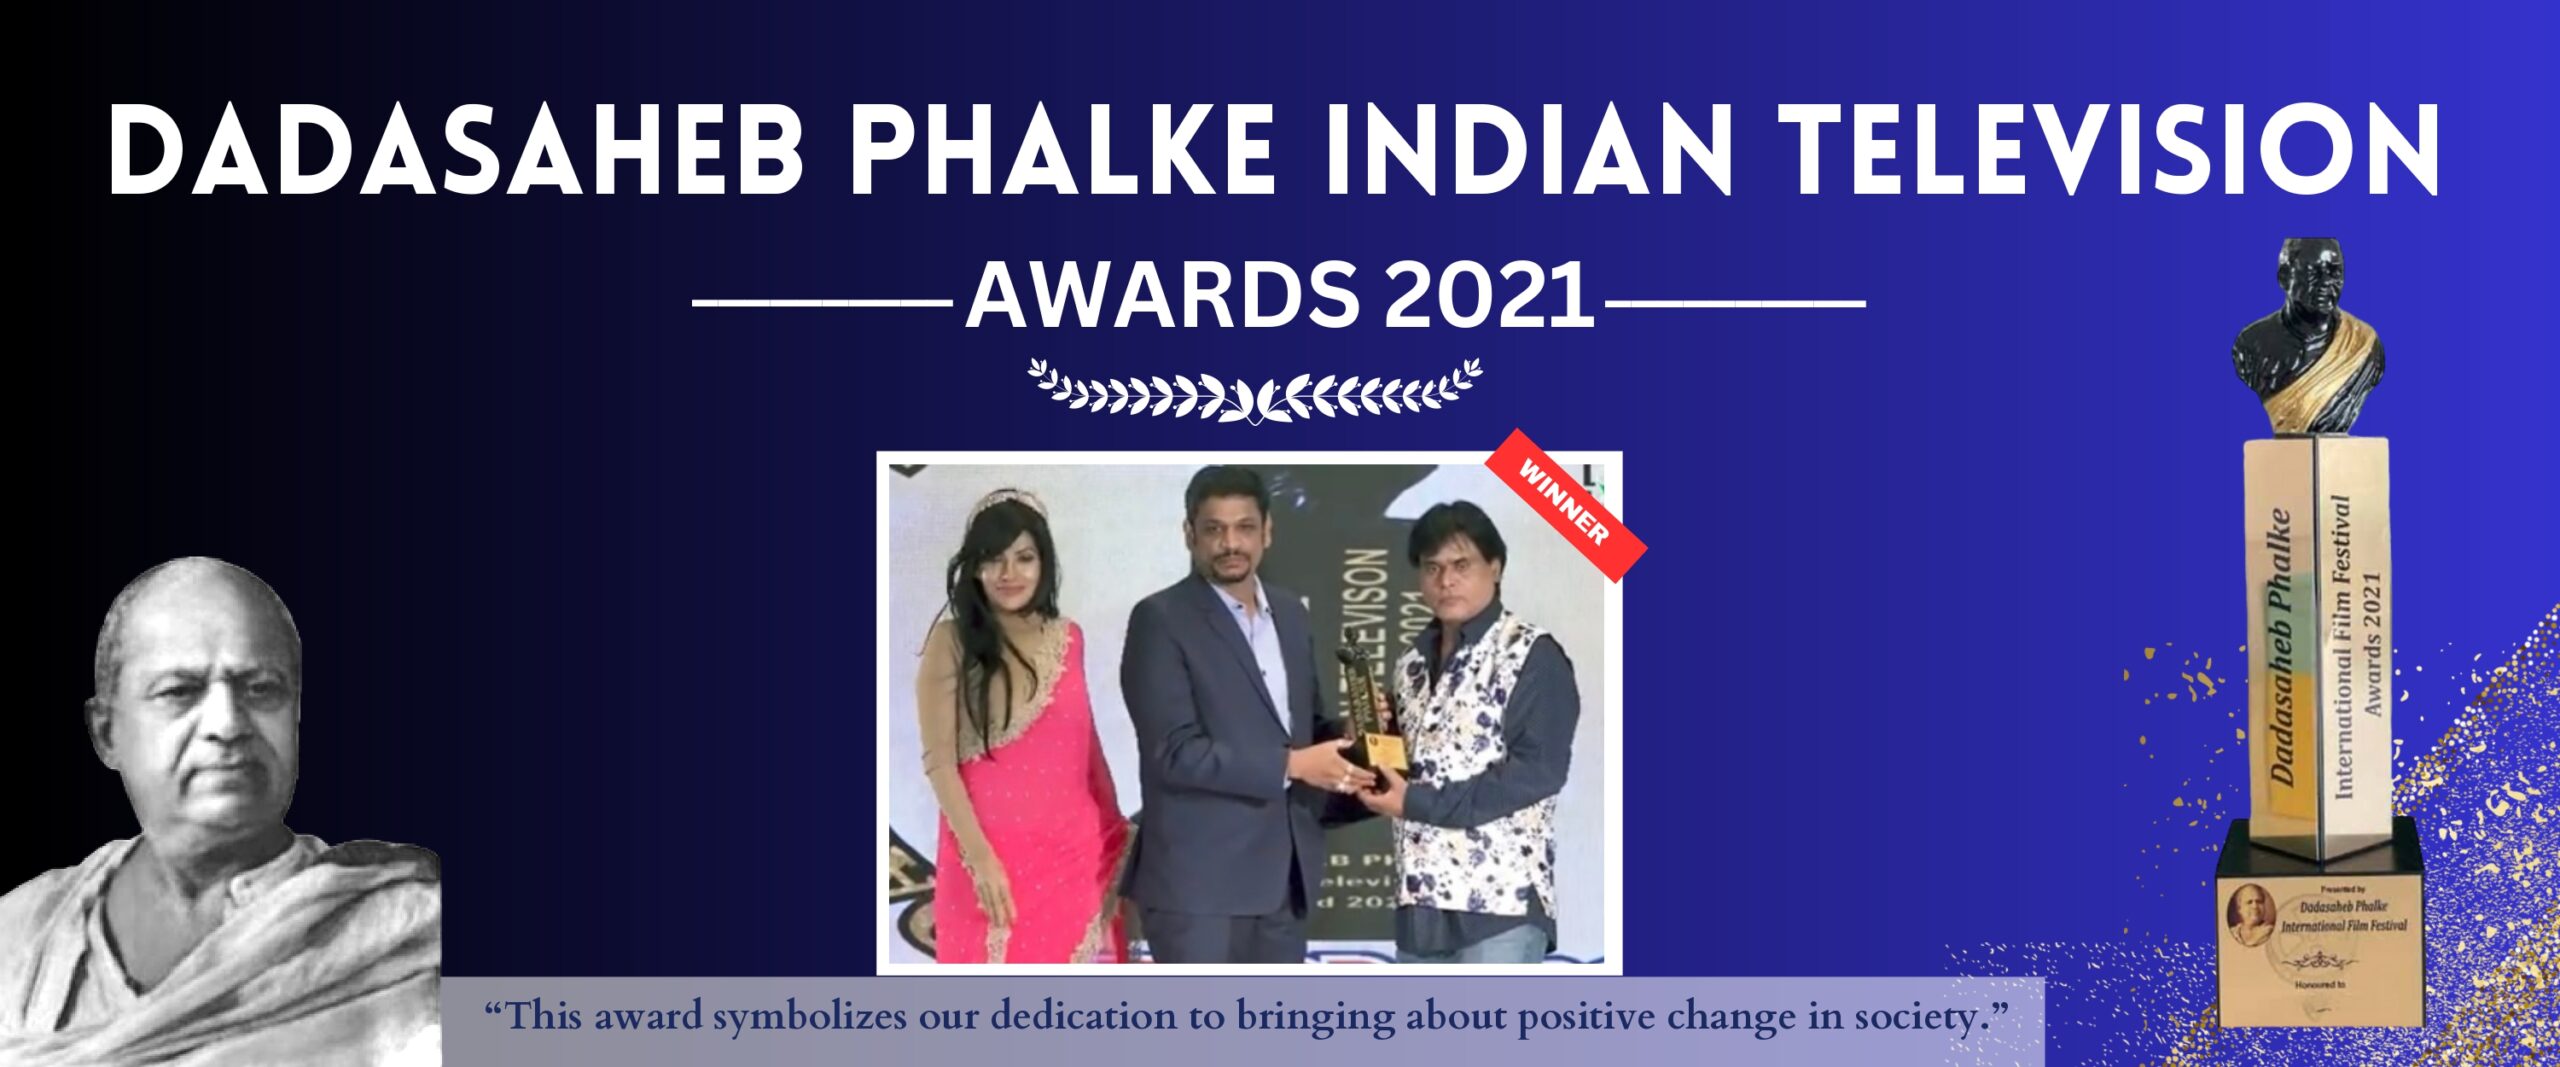 DADASAHEB PHALKE INDIAN TELEVISION AWARDS 2021